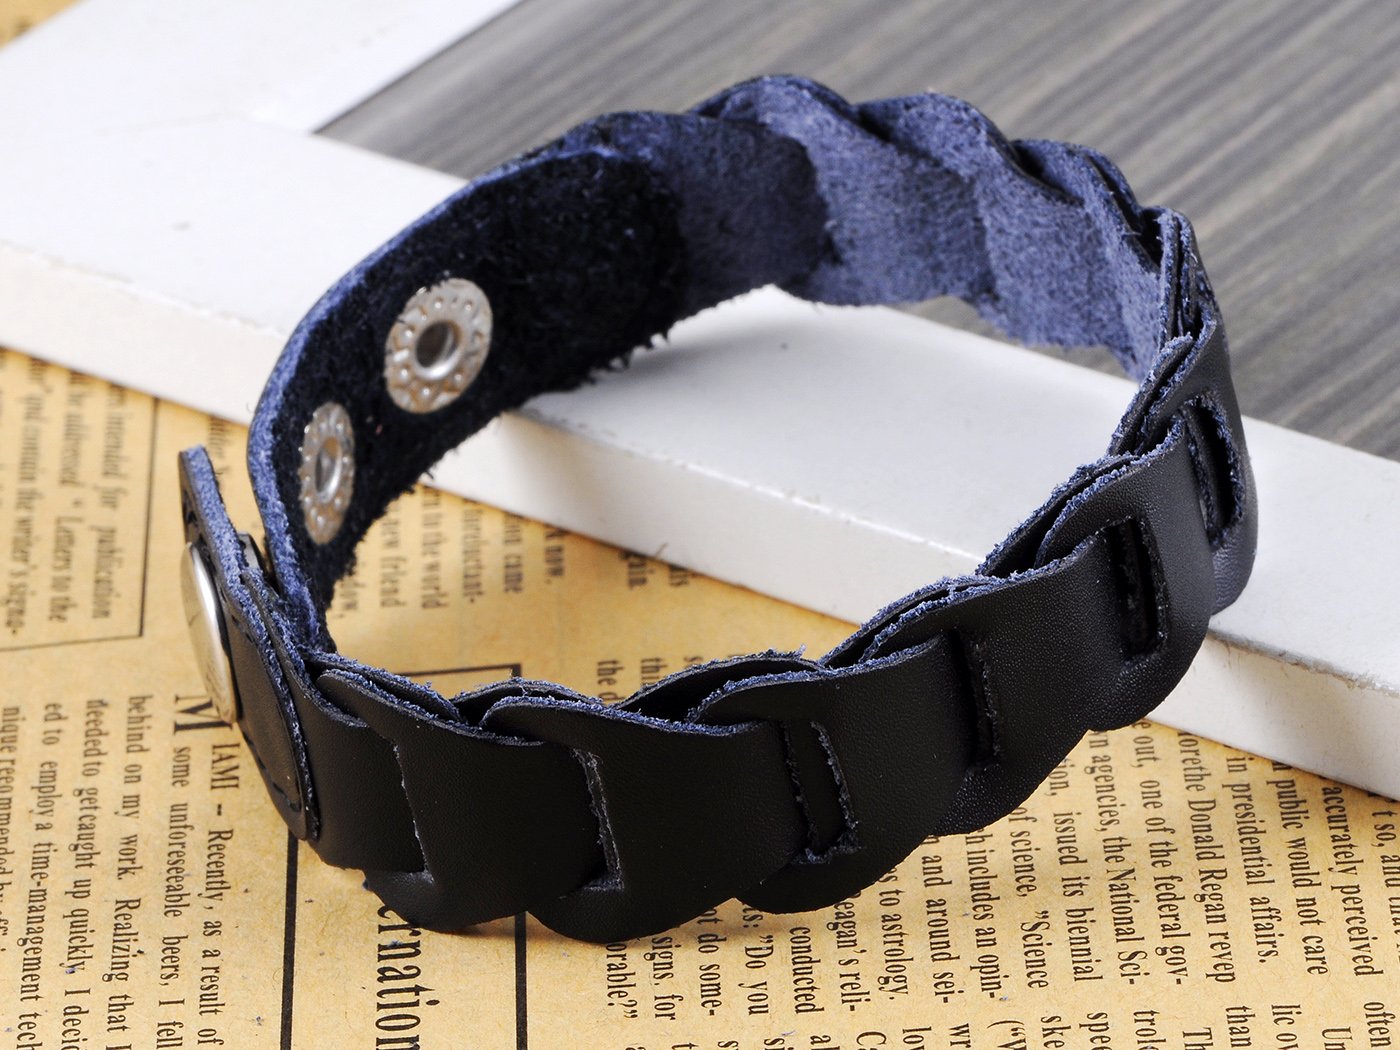 Black Leather Multi Strand Studded Beads Snap On Arm Cuff Bracelet